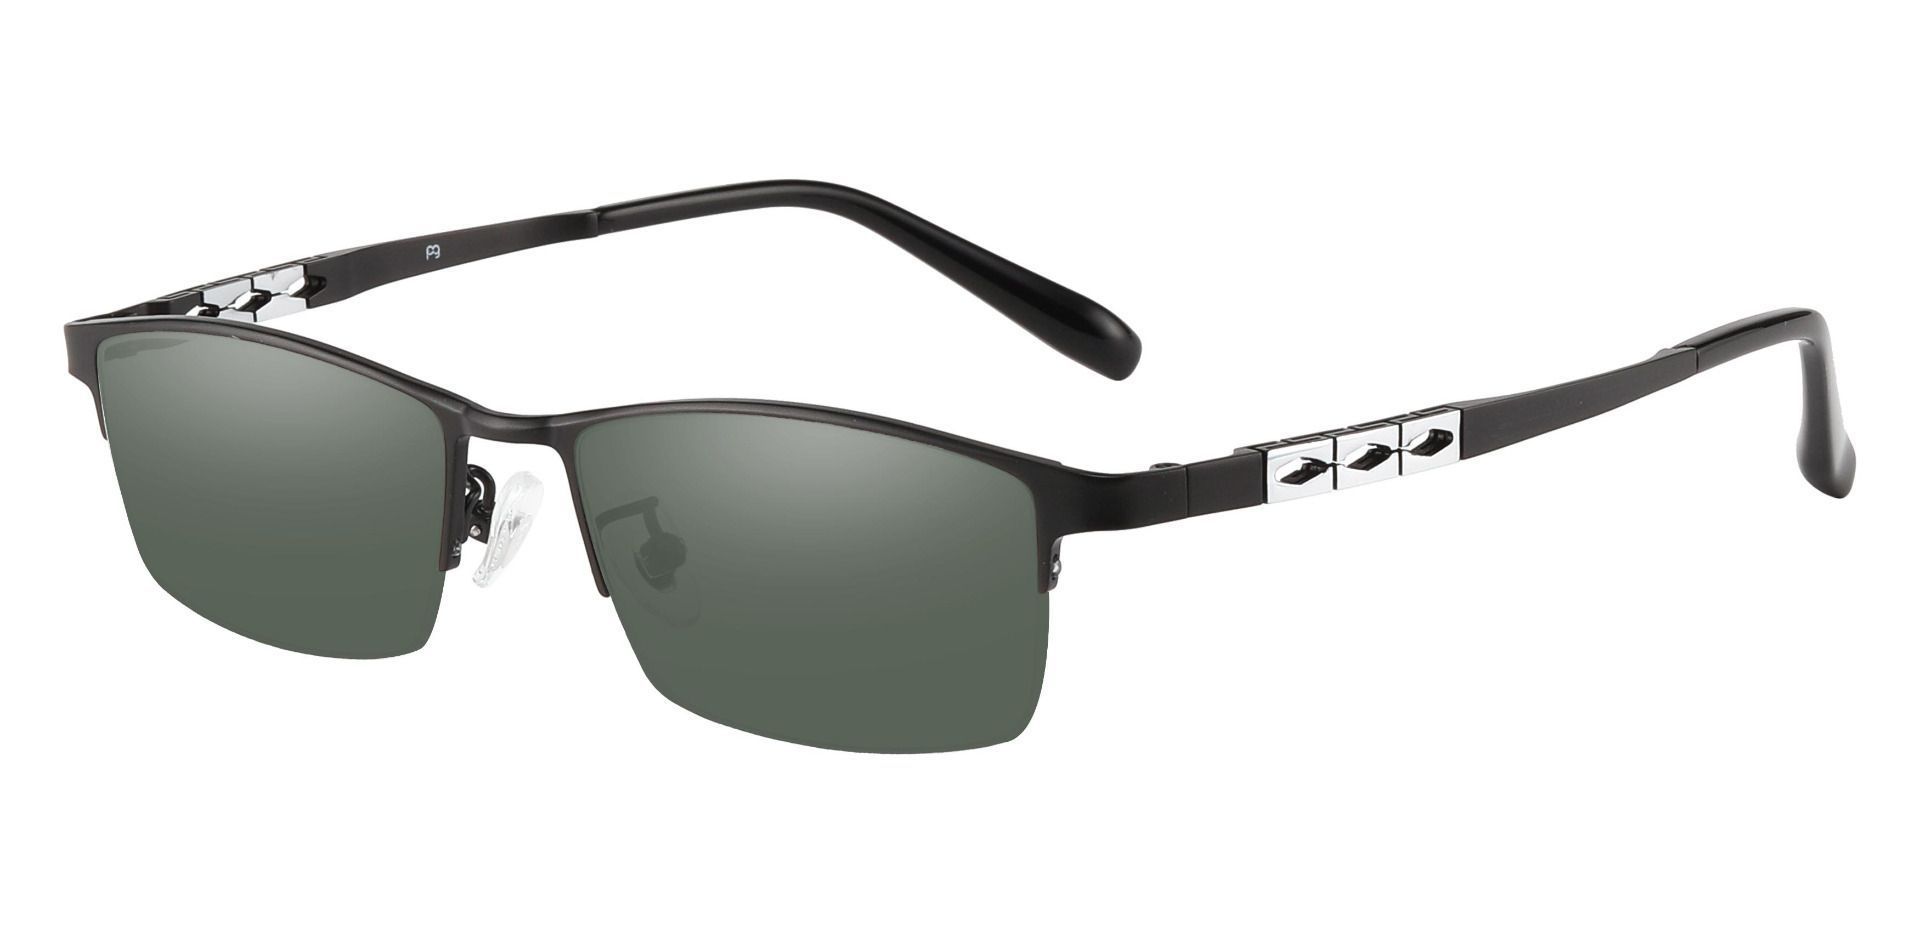 Burlington Rectangle Prescription Sunglasses - Black Frame With Green Lenses